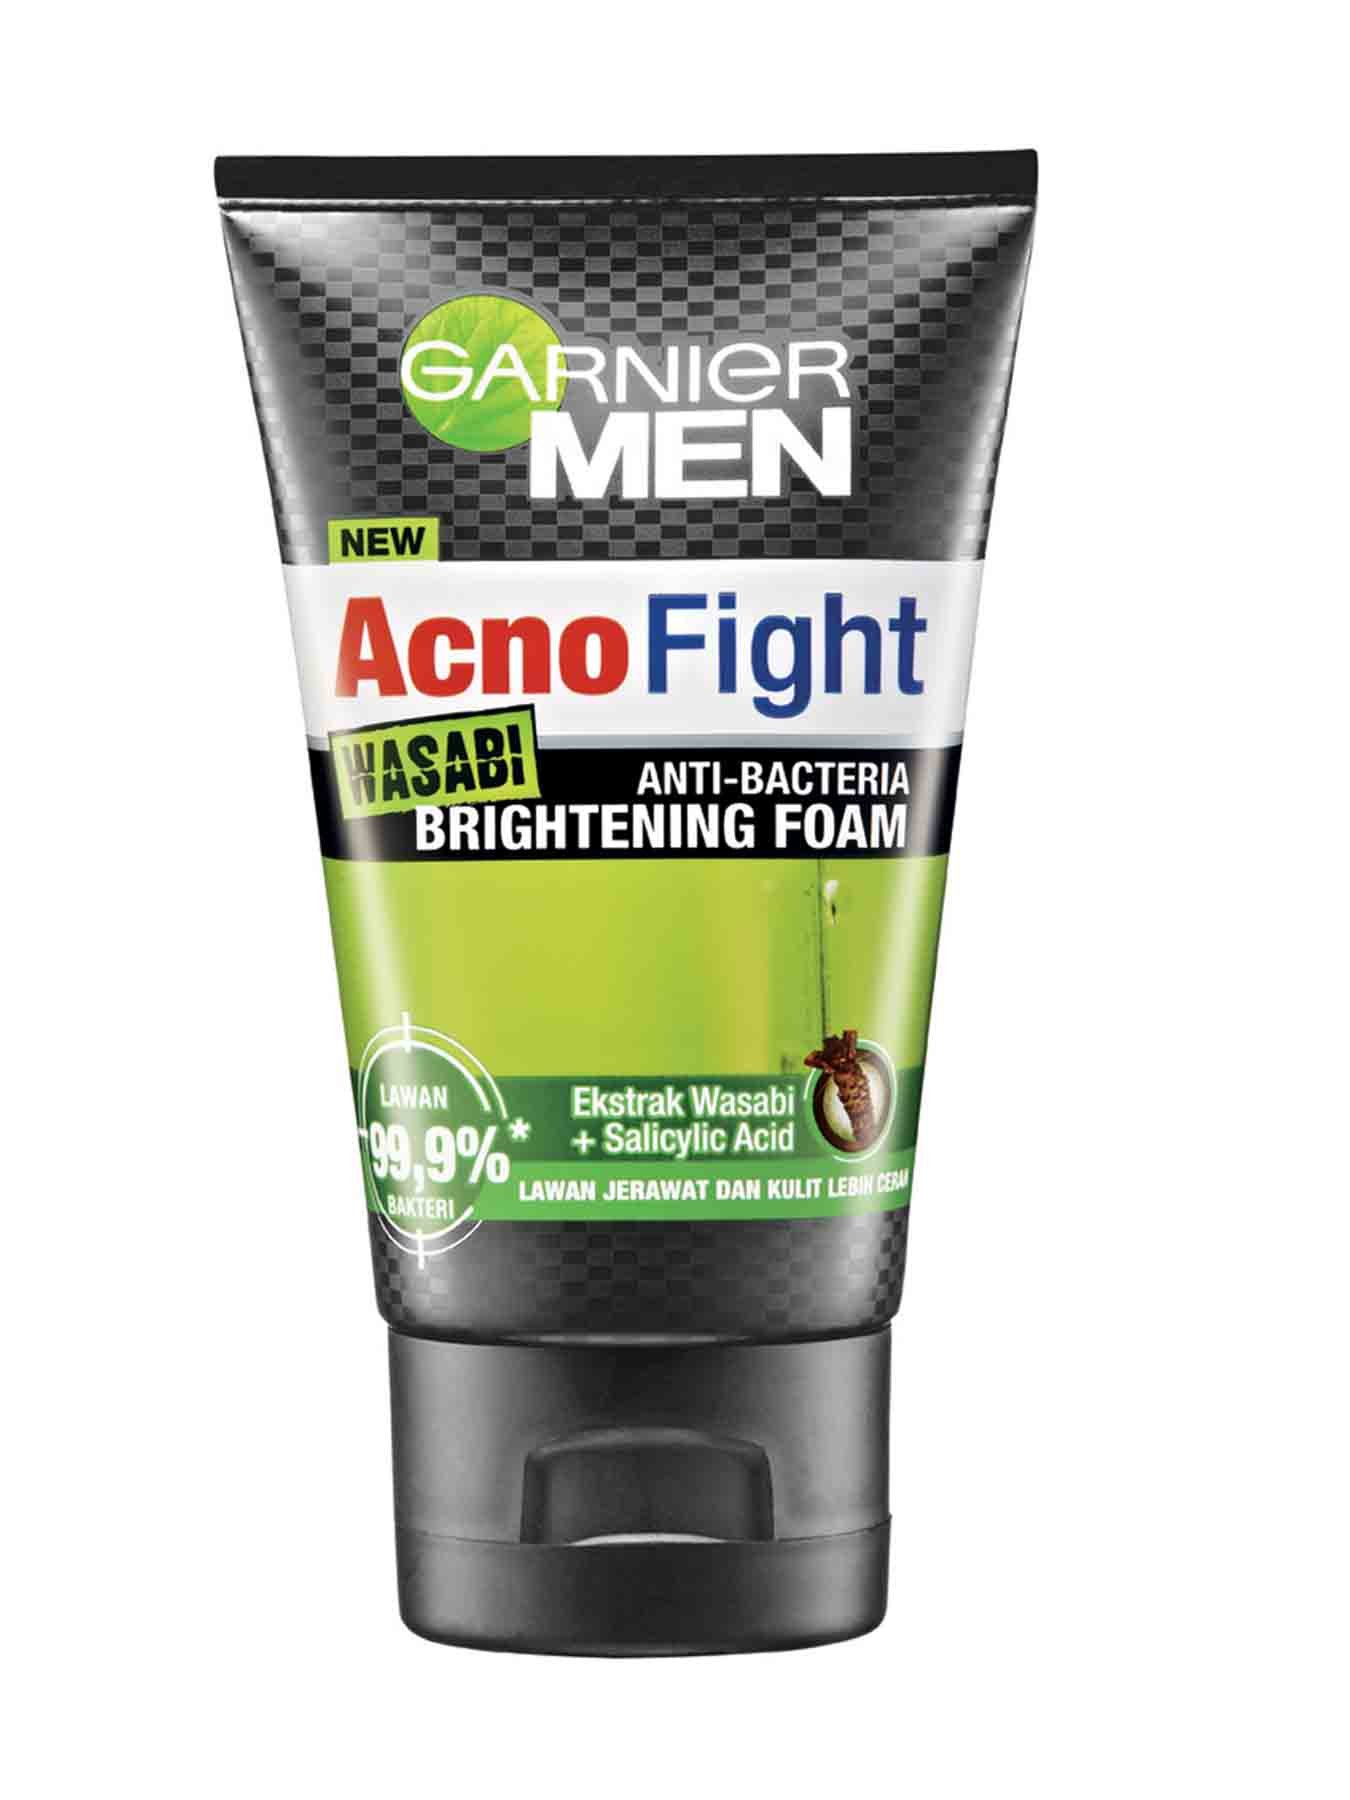 Garnier Men Acno Fight Wasabi Anti Bacteria Brightening Foam 100ml